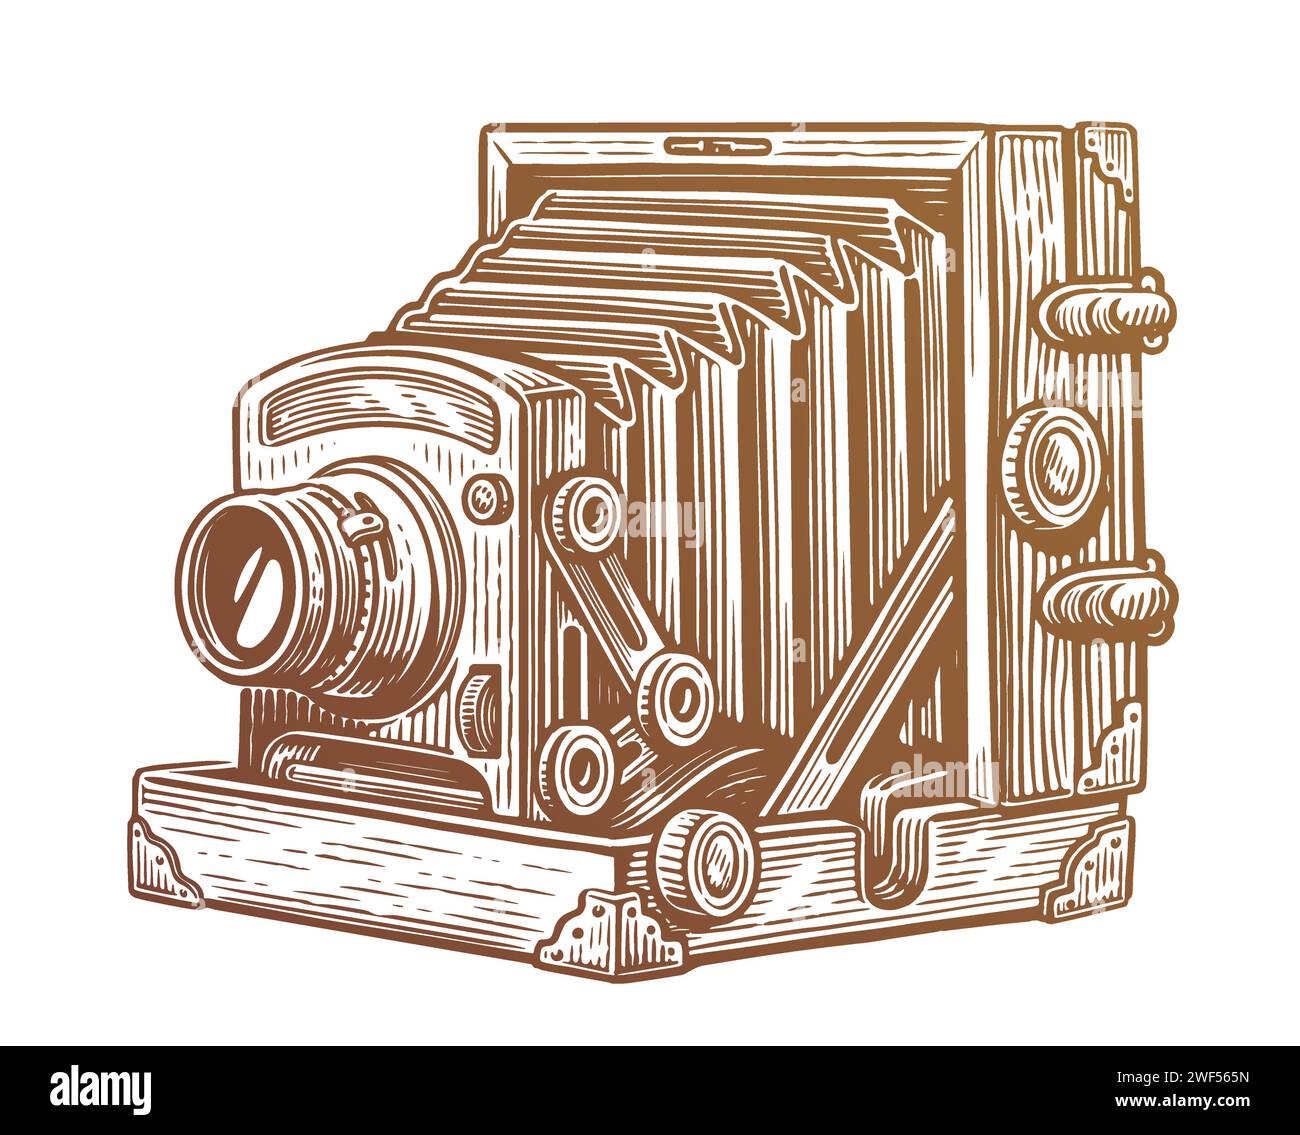 Alte alte alte Kamera mit Balg. Retro-Fotokamera aus Holz. Illustration des Skizzenvektors Stock Vektor